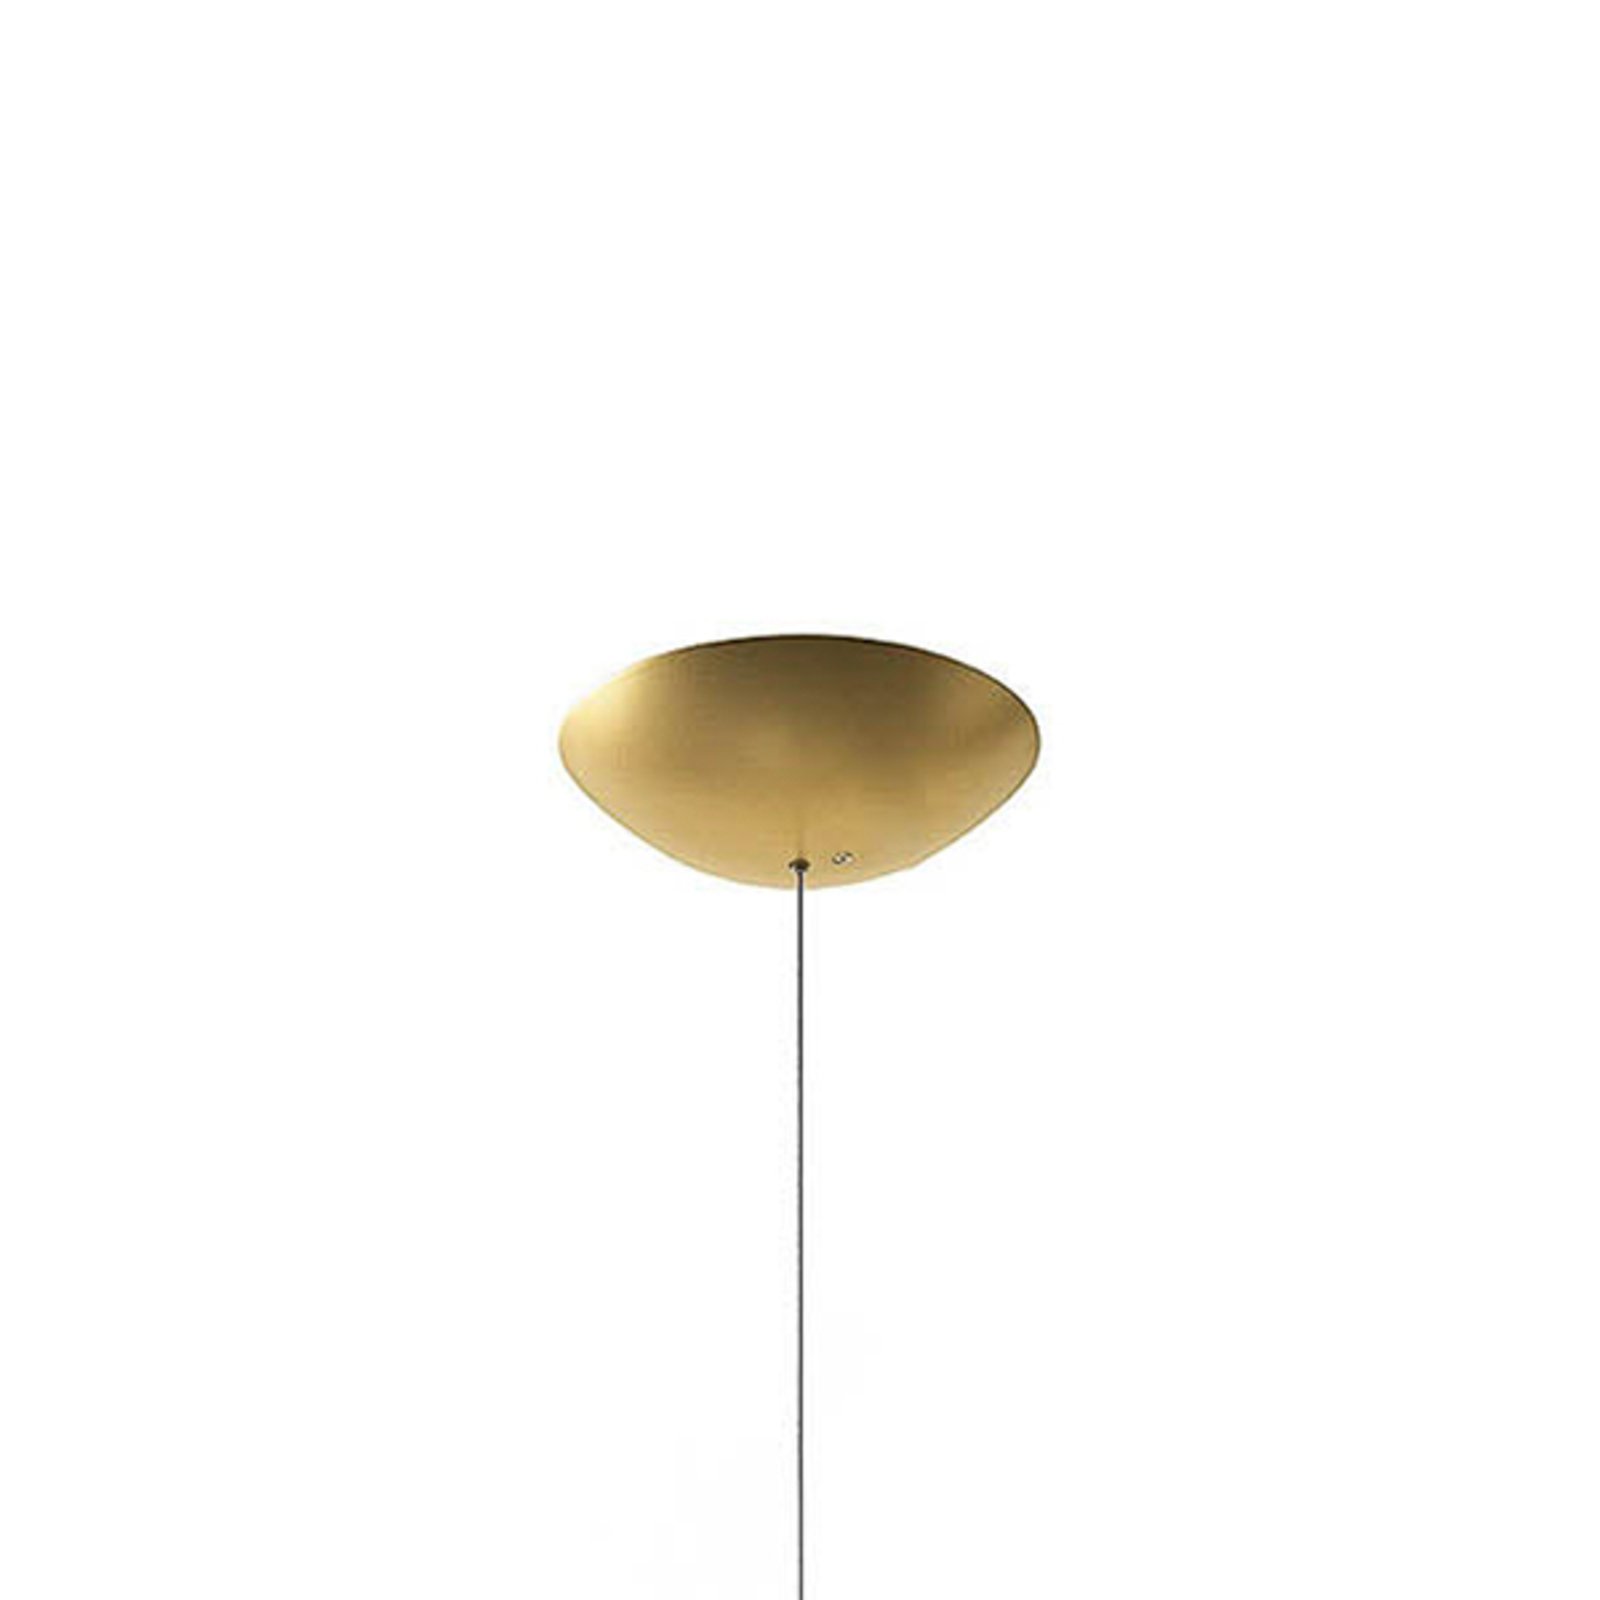 Foscarini Gregg Piccola hanglamp, goud